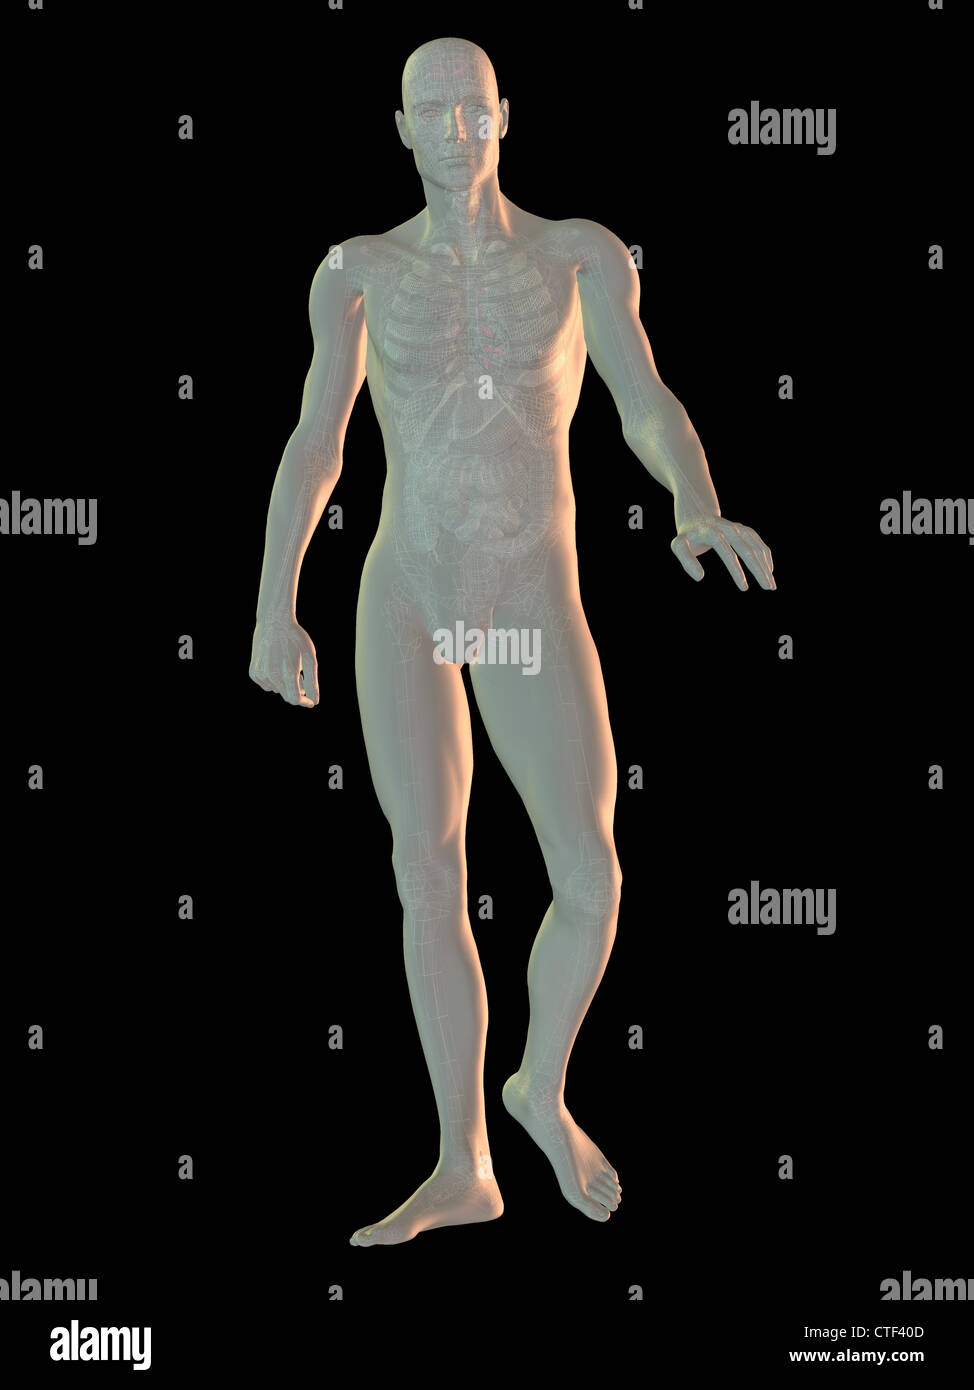 Digitally generated image of walking human representation with inner human organs visible Stock Photo